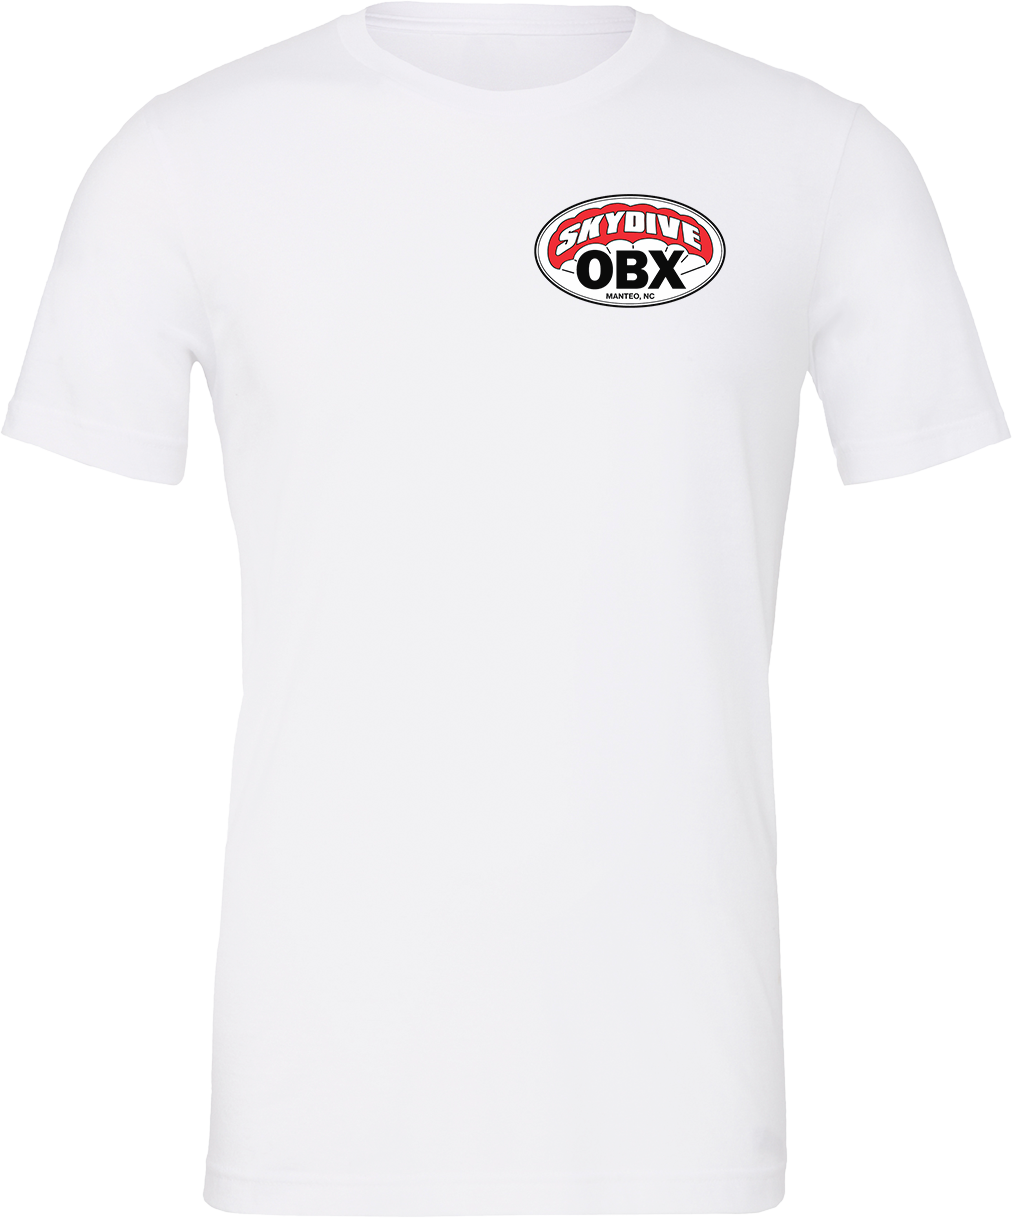 Mens T-shirt White – Skydive OBX